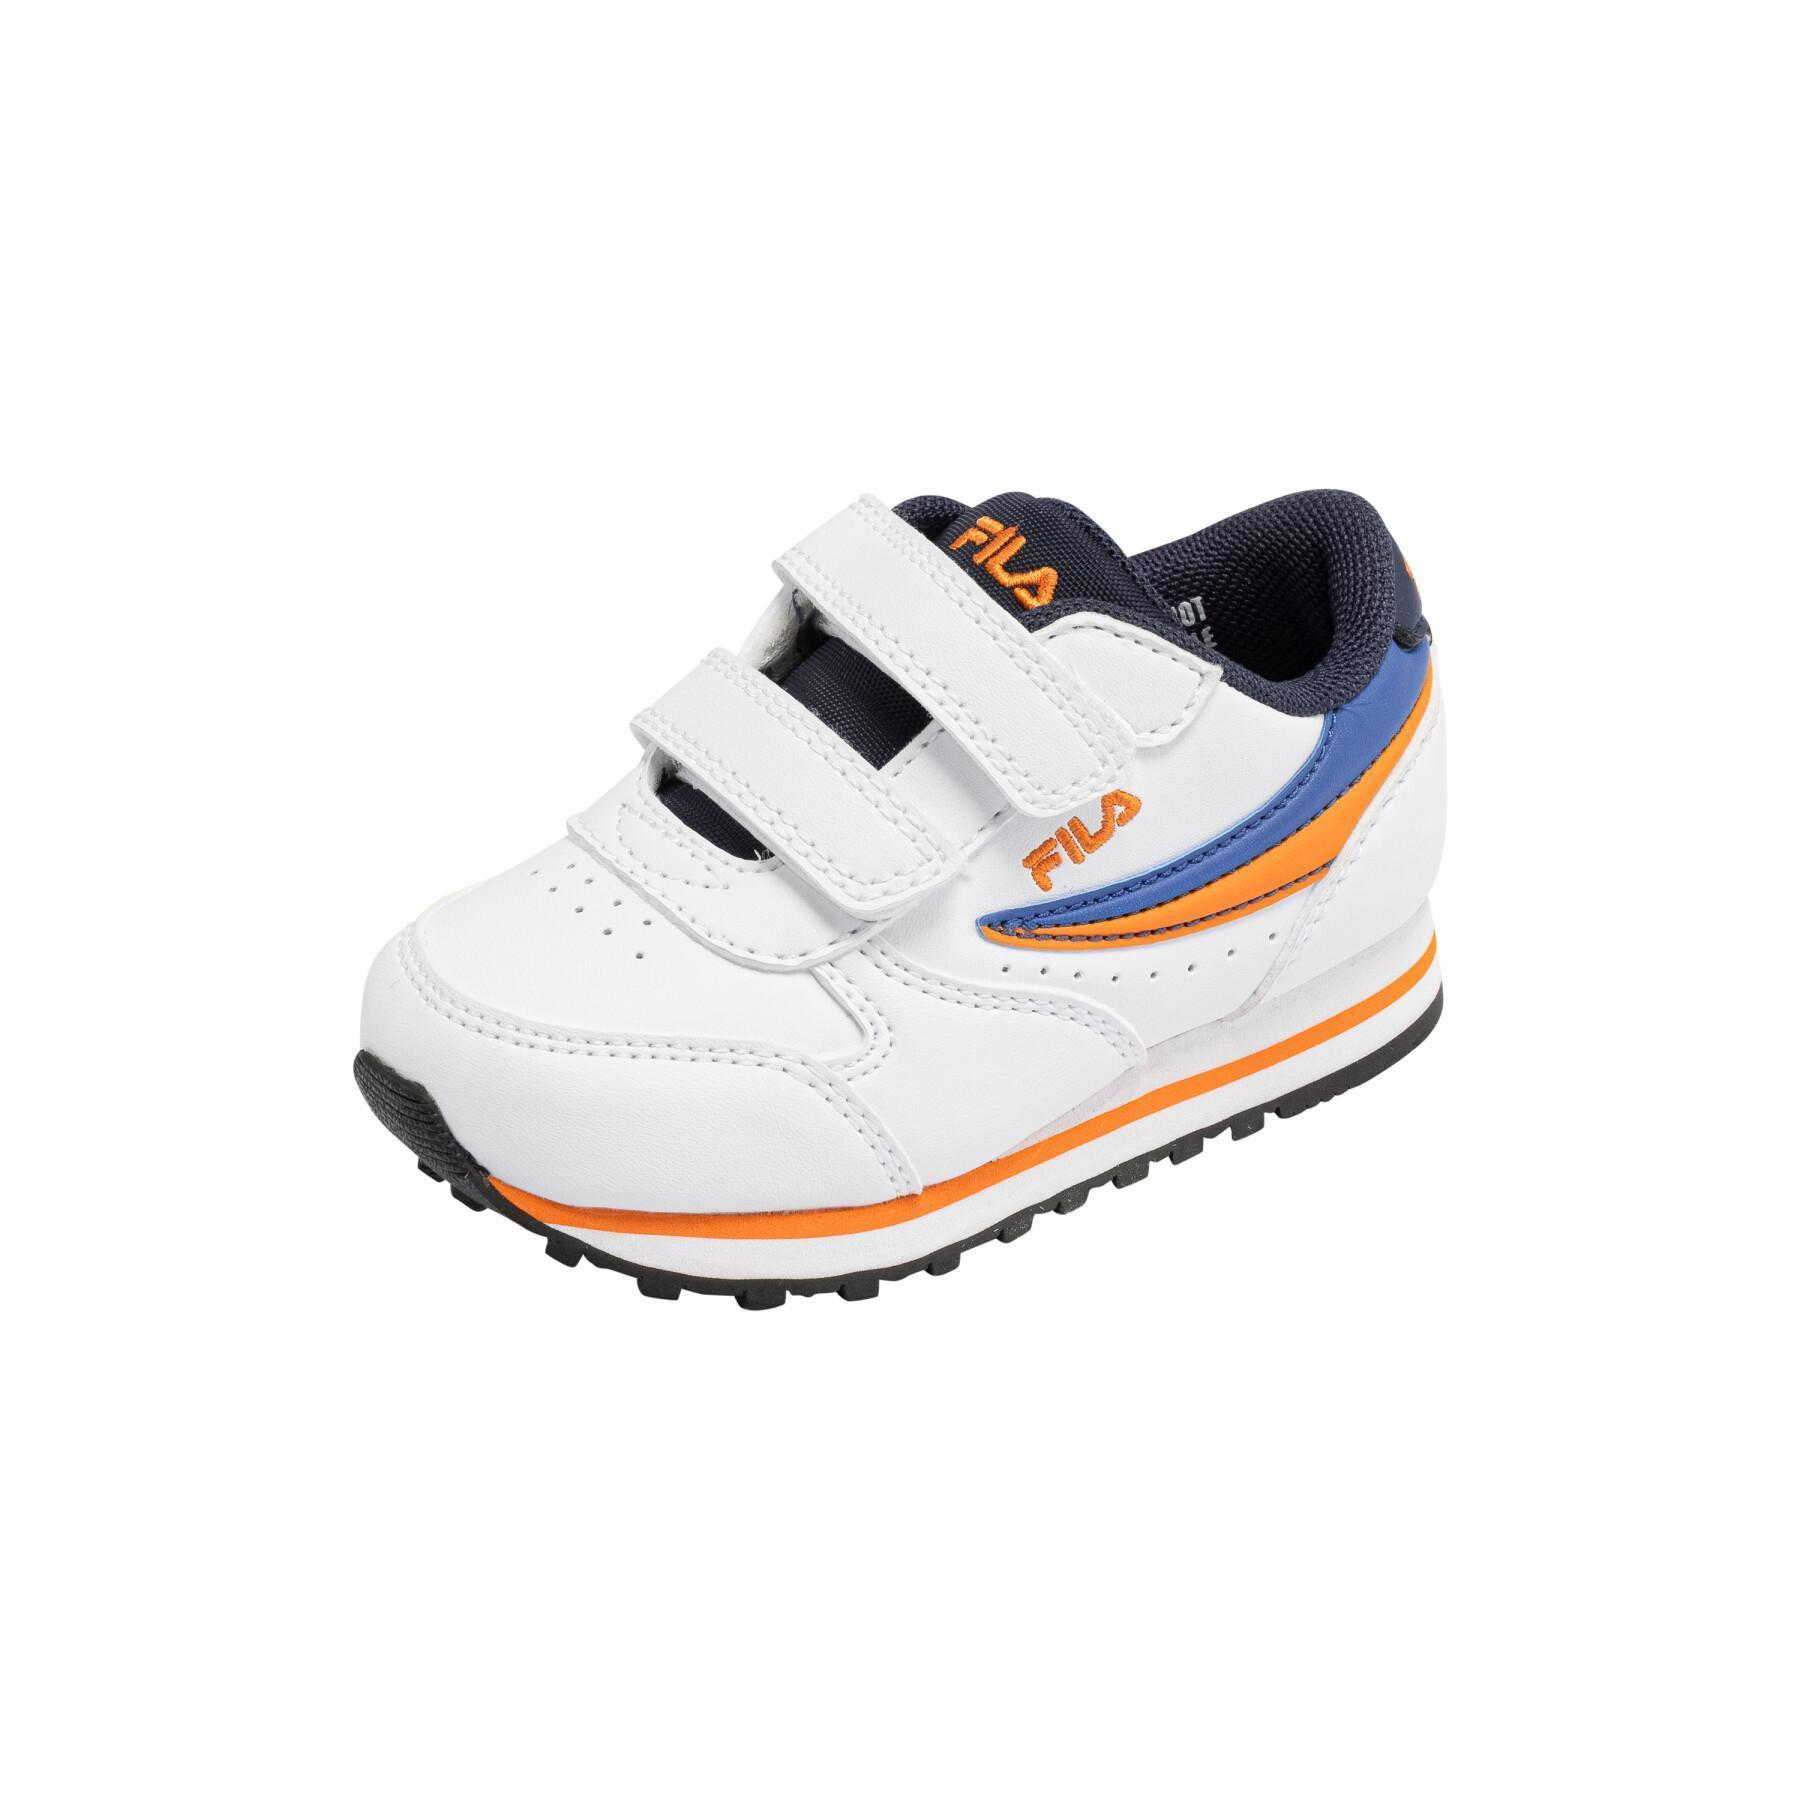 Zapatillas para bebés Fila Orbit Velcro TDL